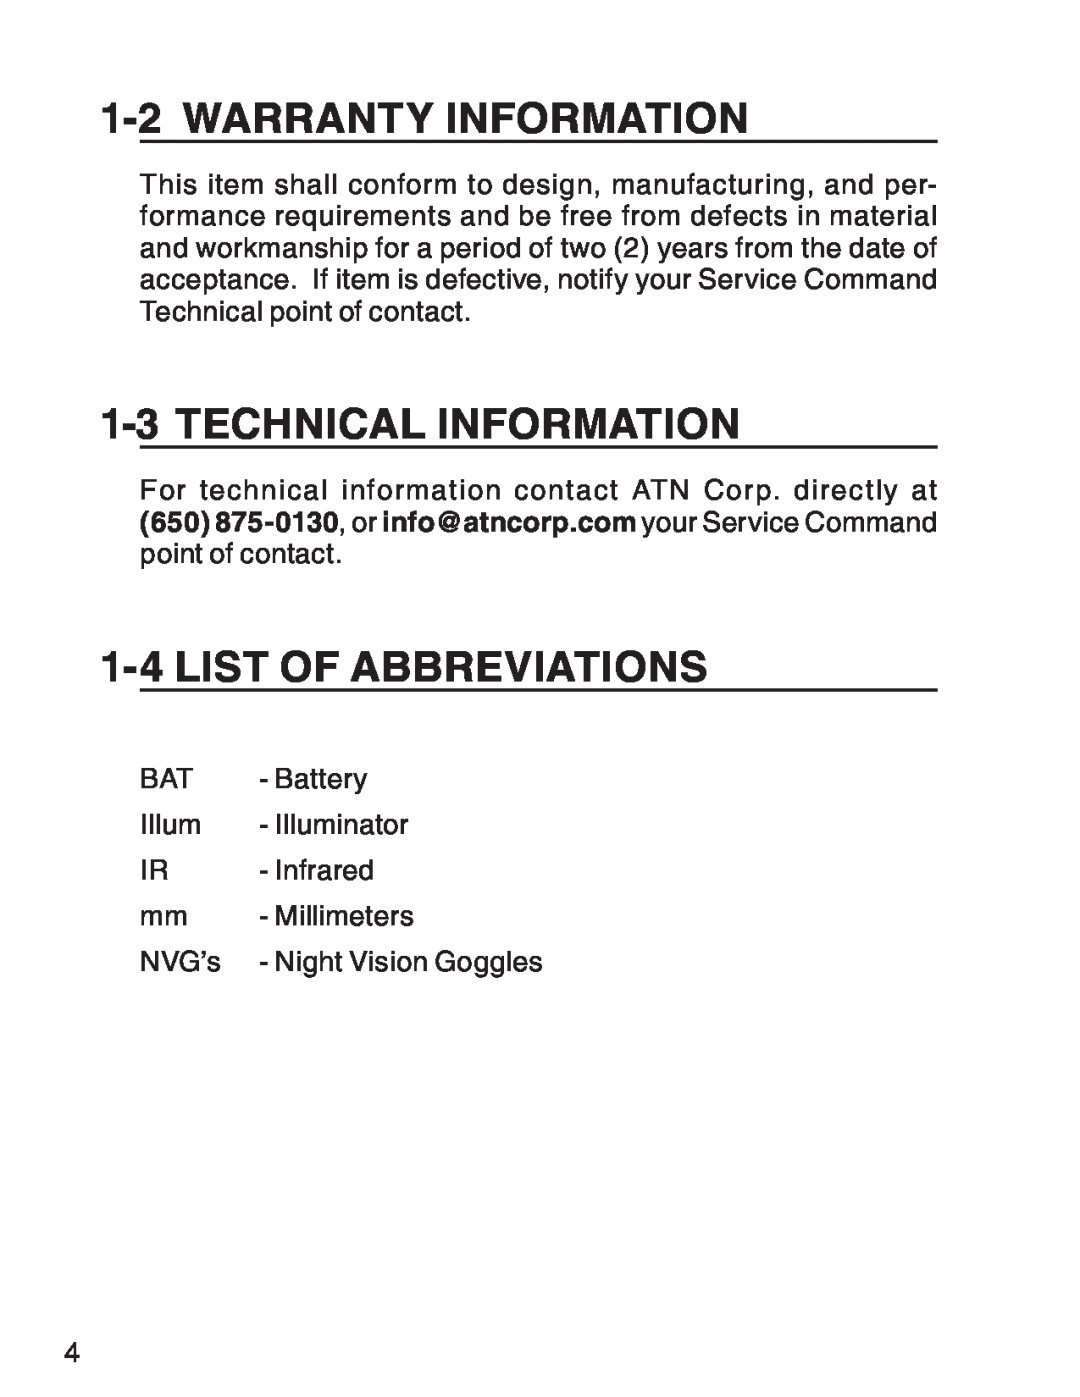 ATN 3 manual Warranty Information, Technical Information, List Of Abbreviations 